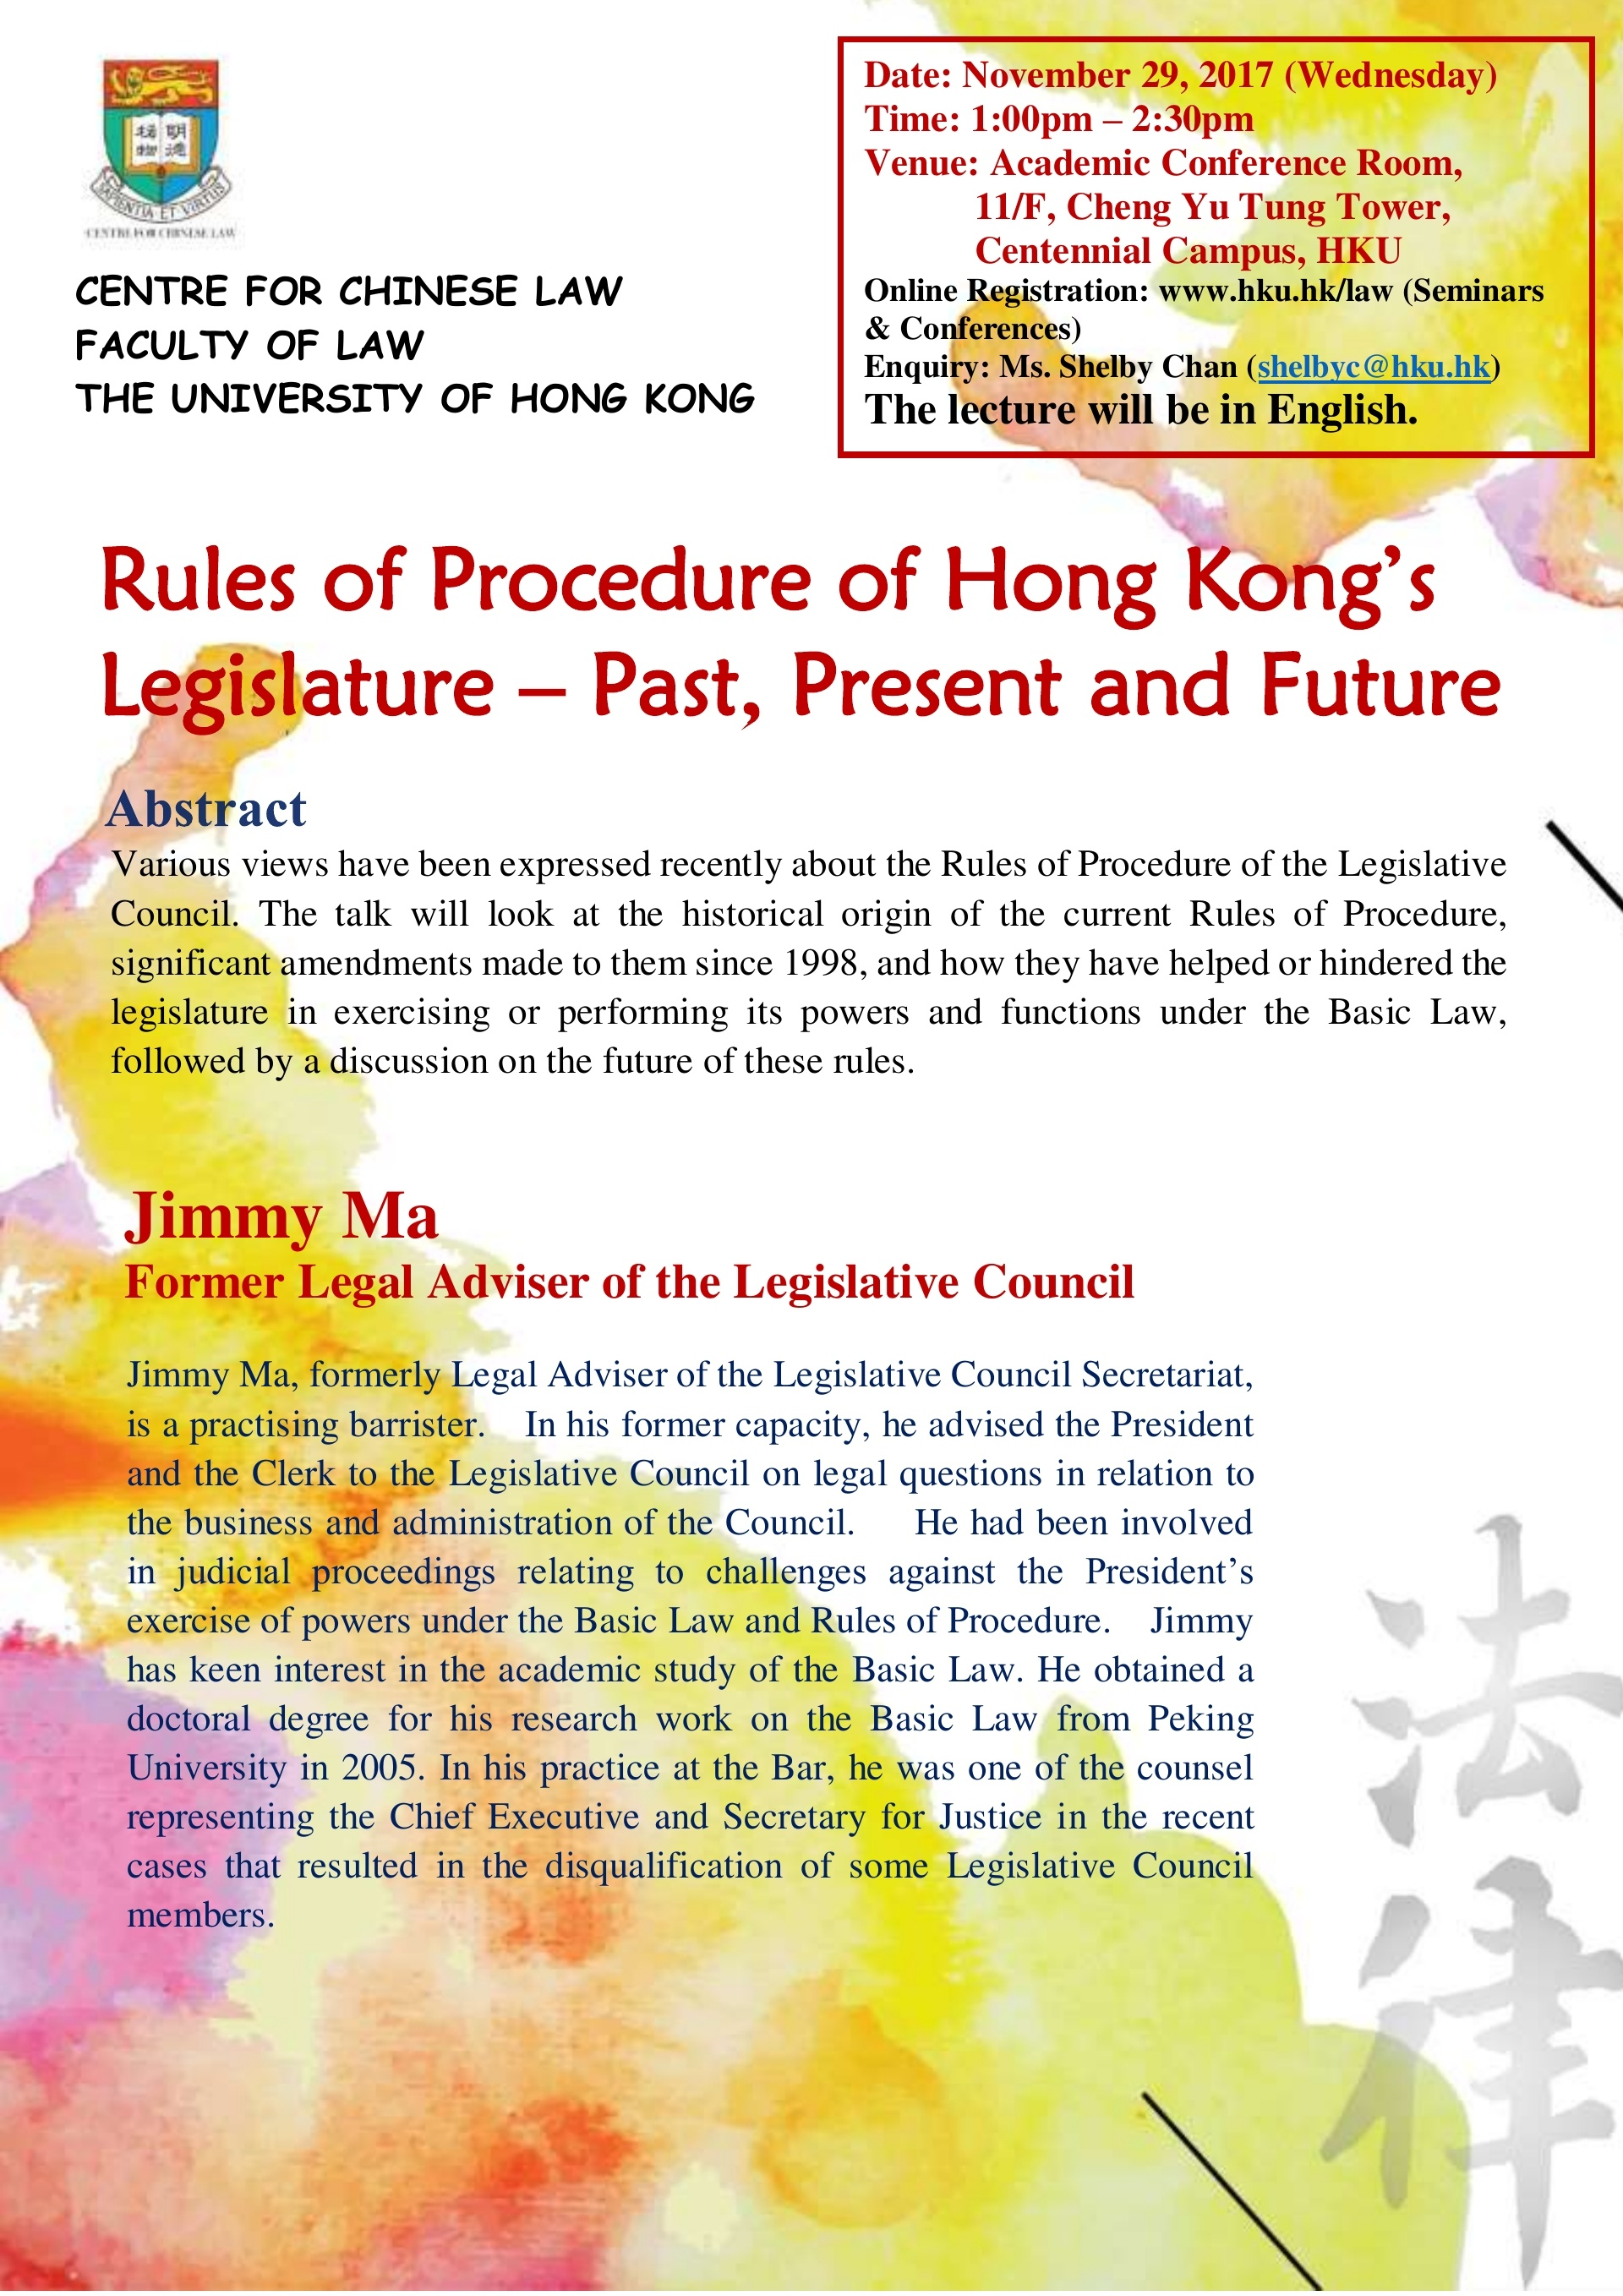 Rules of Procedure of Hong Kong's Legislature - Past, Present and Future